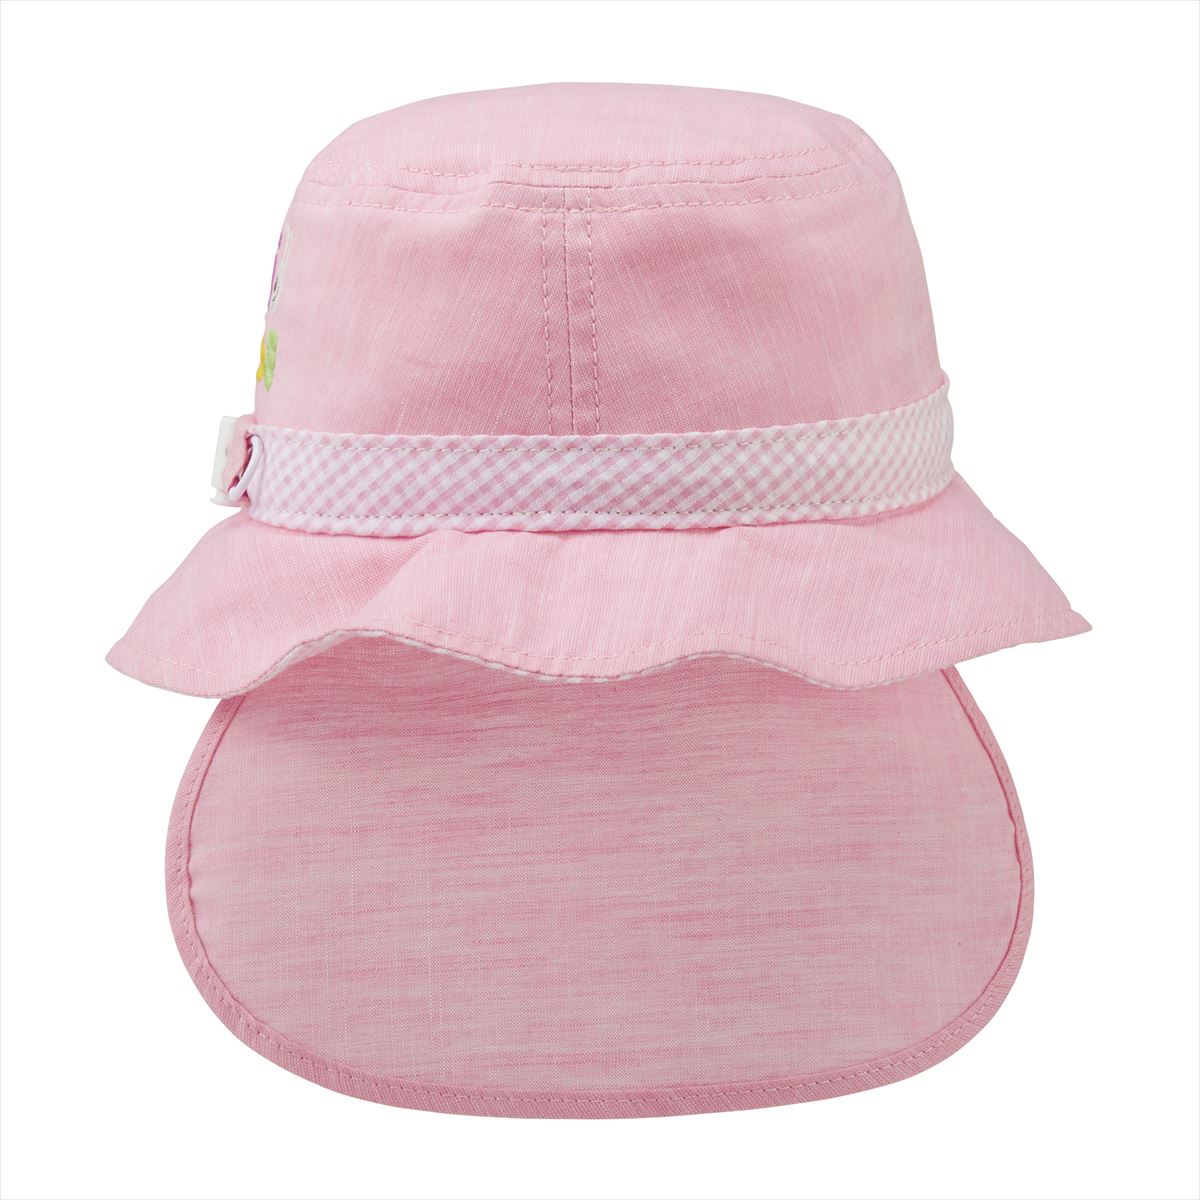 Sun-Safe Usako Bucket Hat (UV Protection) Blue / XS (6-12mo)